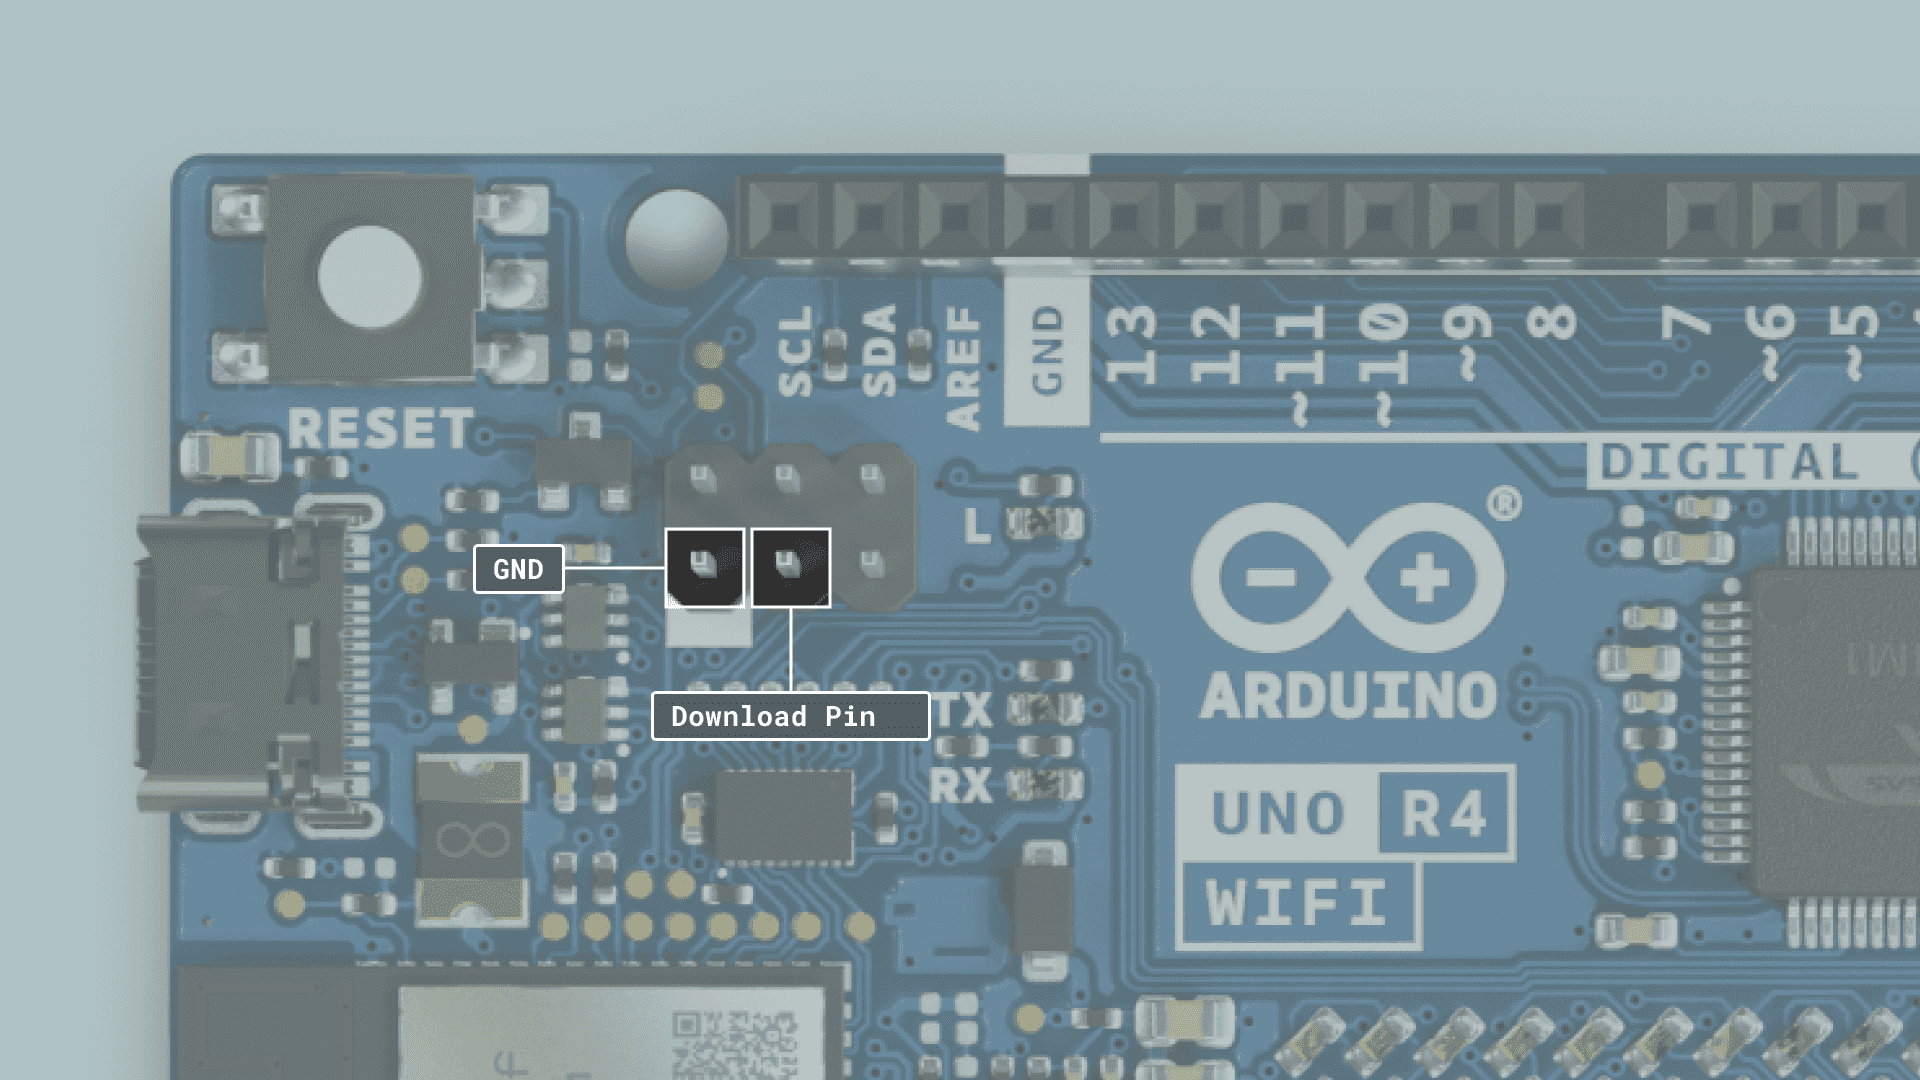 Arduino UNO R4 WiFi [ABX00087] - Renesas RA4M1 / ESP32-S3 - Wi-Fi,  Bluetooth, USB-C, CAN, DAC, OP AMP, conector Qwiic, matriz LED de 12 x 8 :  : Electrónicos